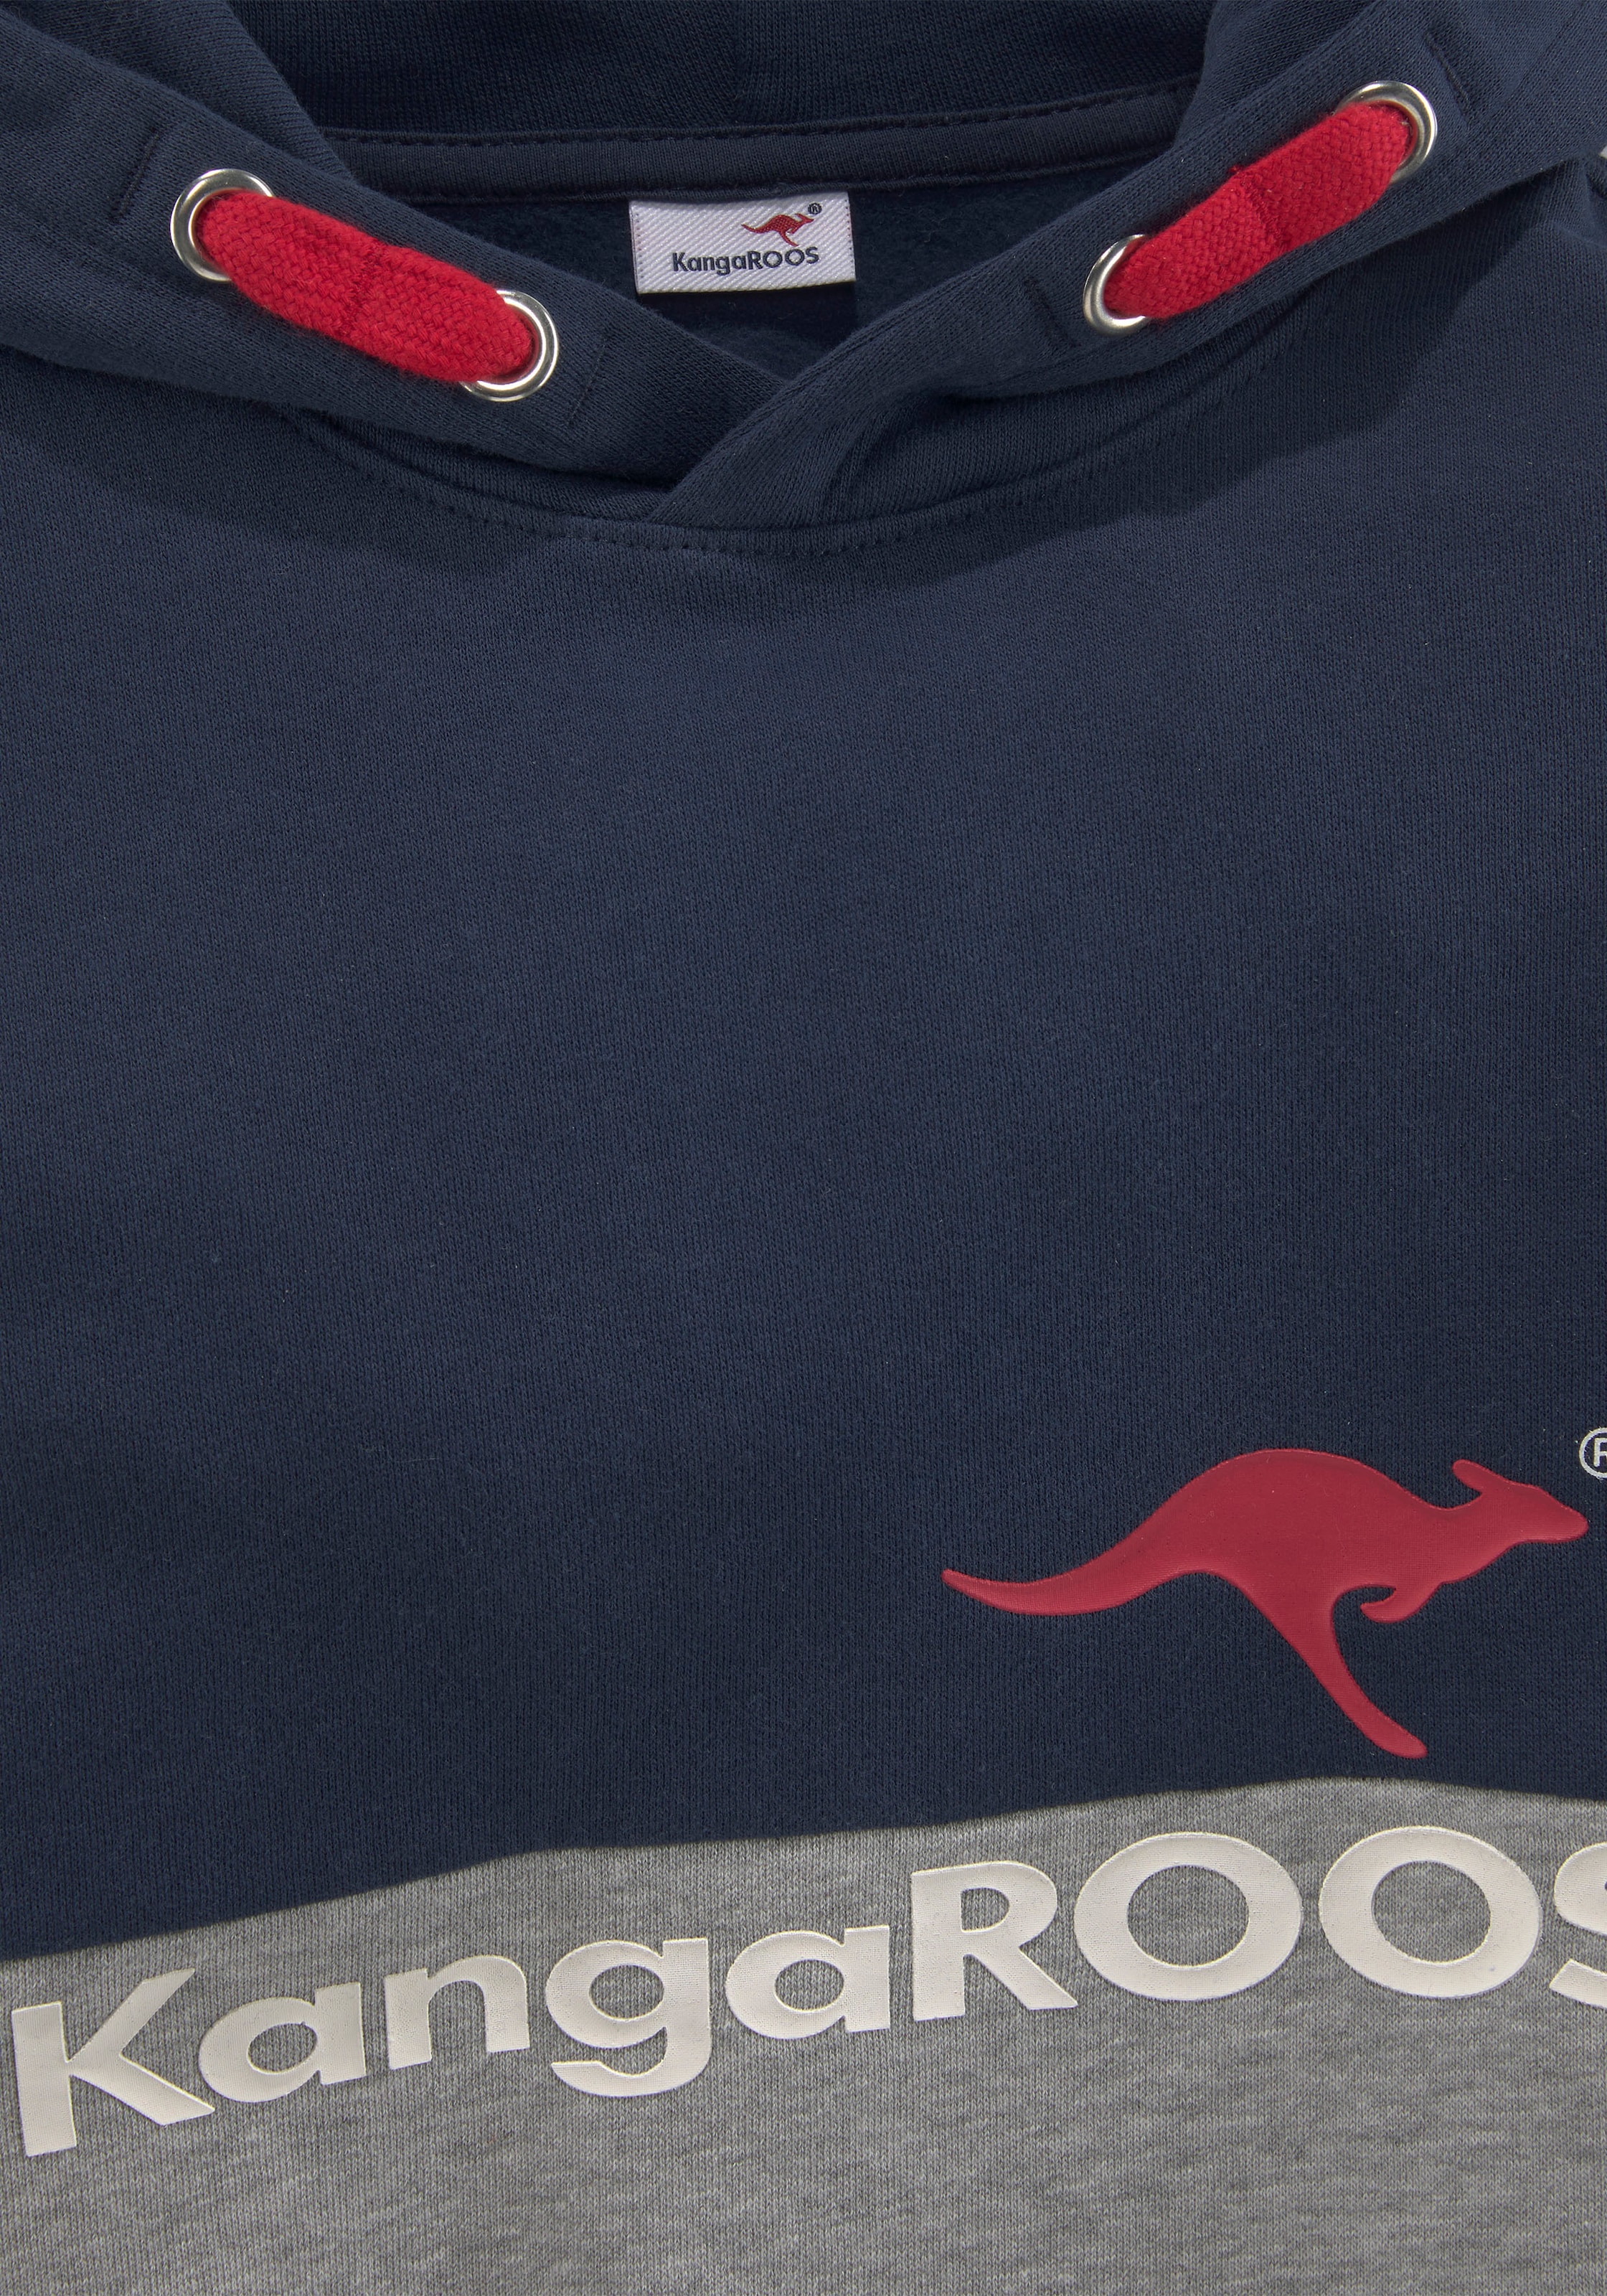 KangaROOS Kapuzensweatshirt, zweifarbig mit Logodruck online kaufen